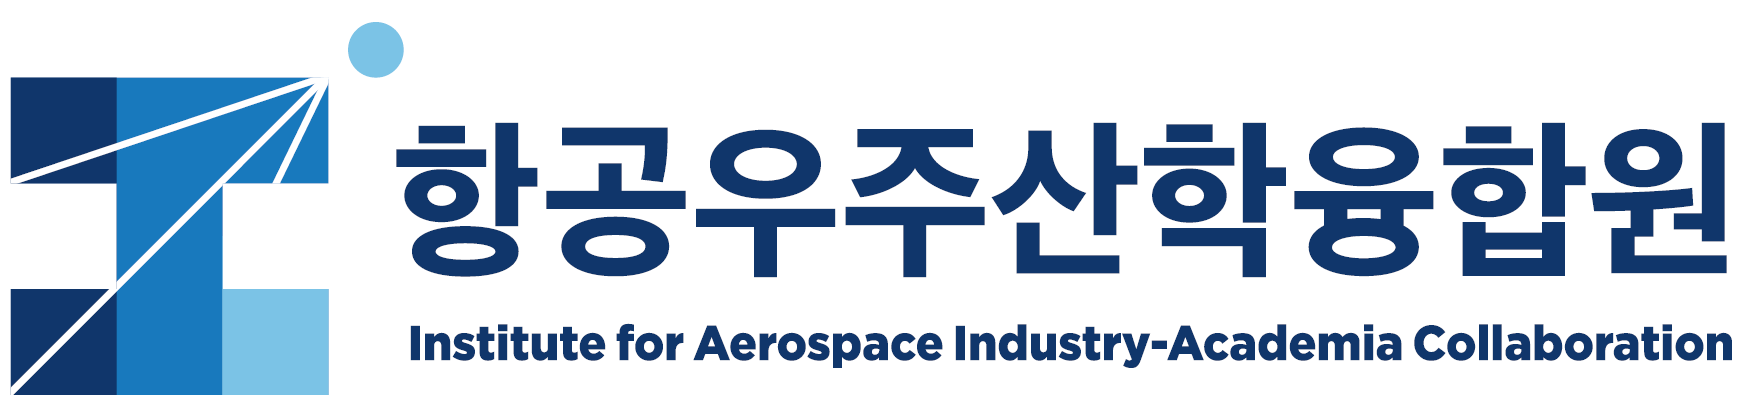 IAIAC (Institute for Aerospace Industry-Academia Collaboration) Logo